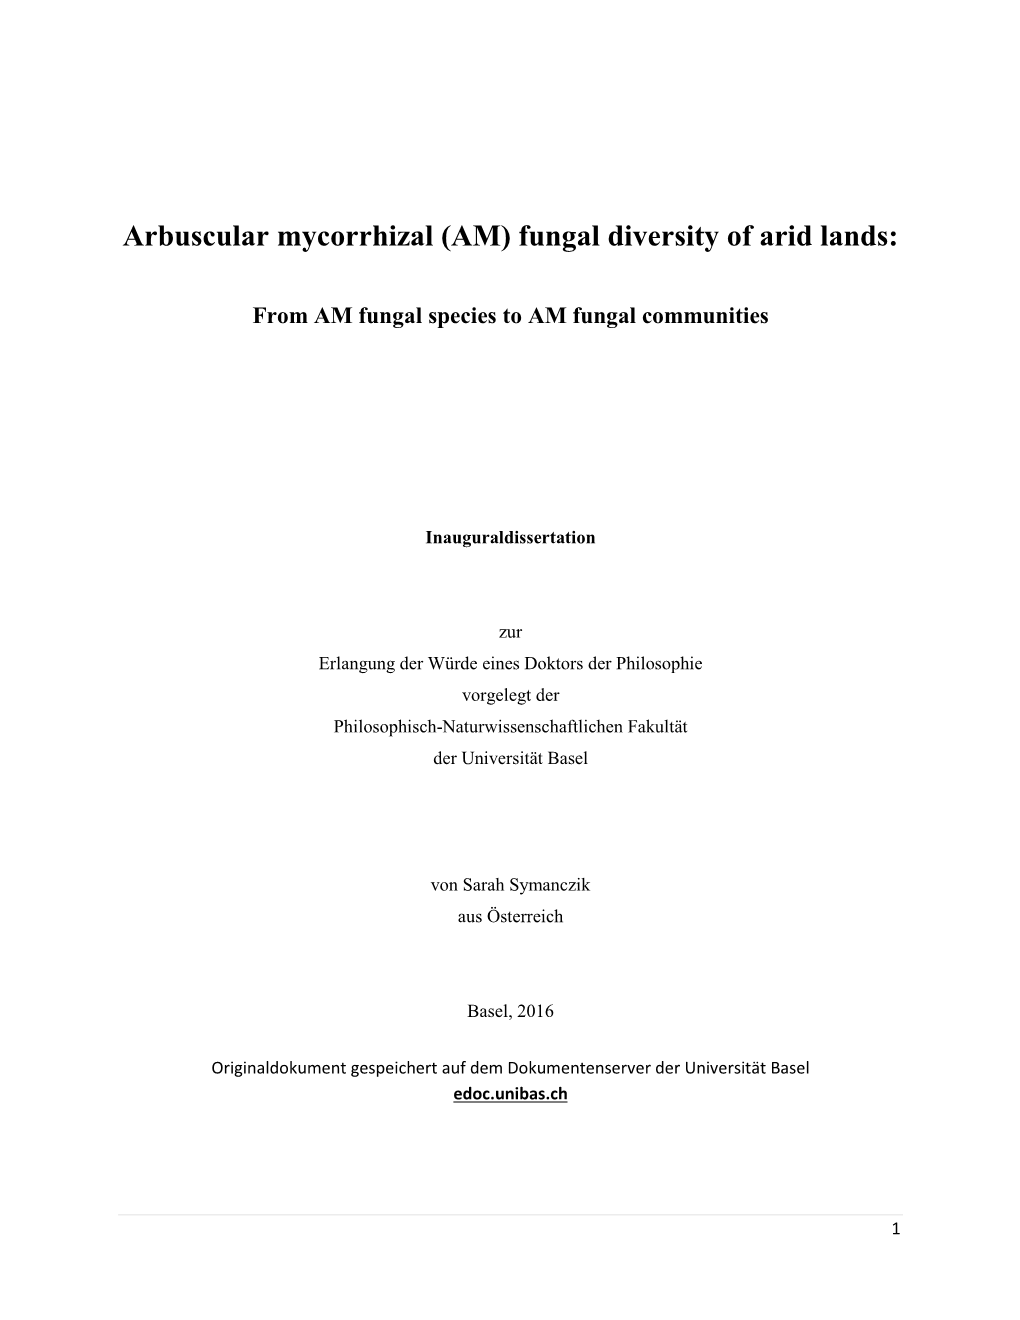 Arbuscular Mycorrhizal (AM) Fungal Diversity of Arid Lands